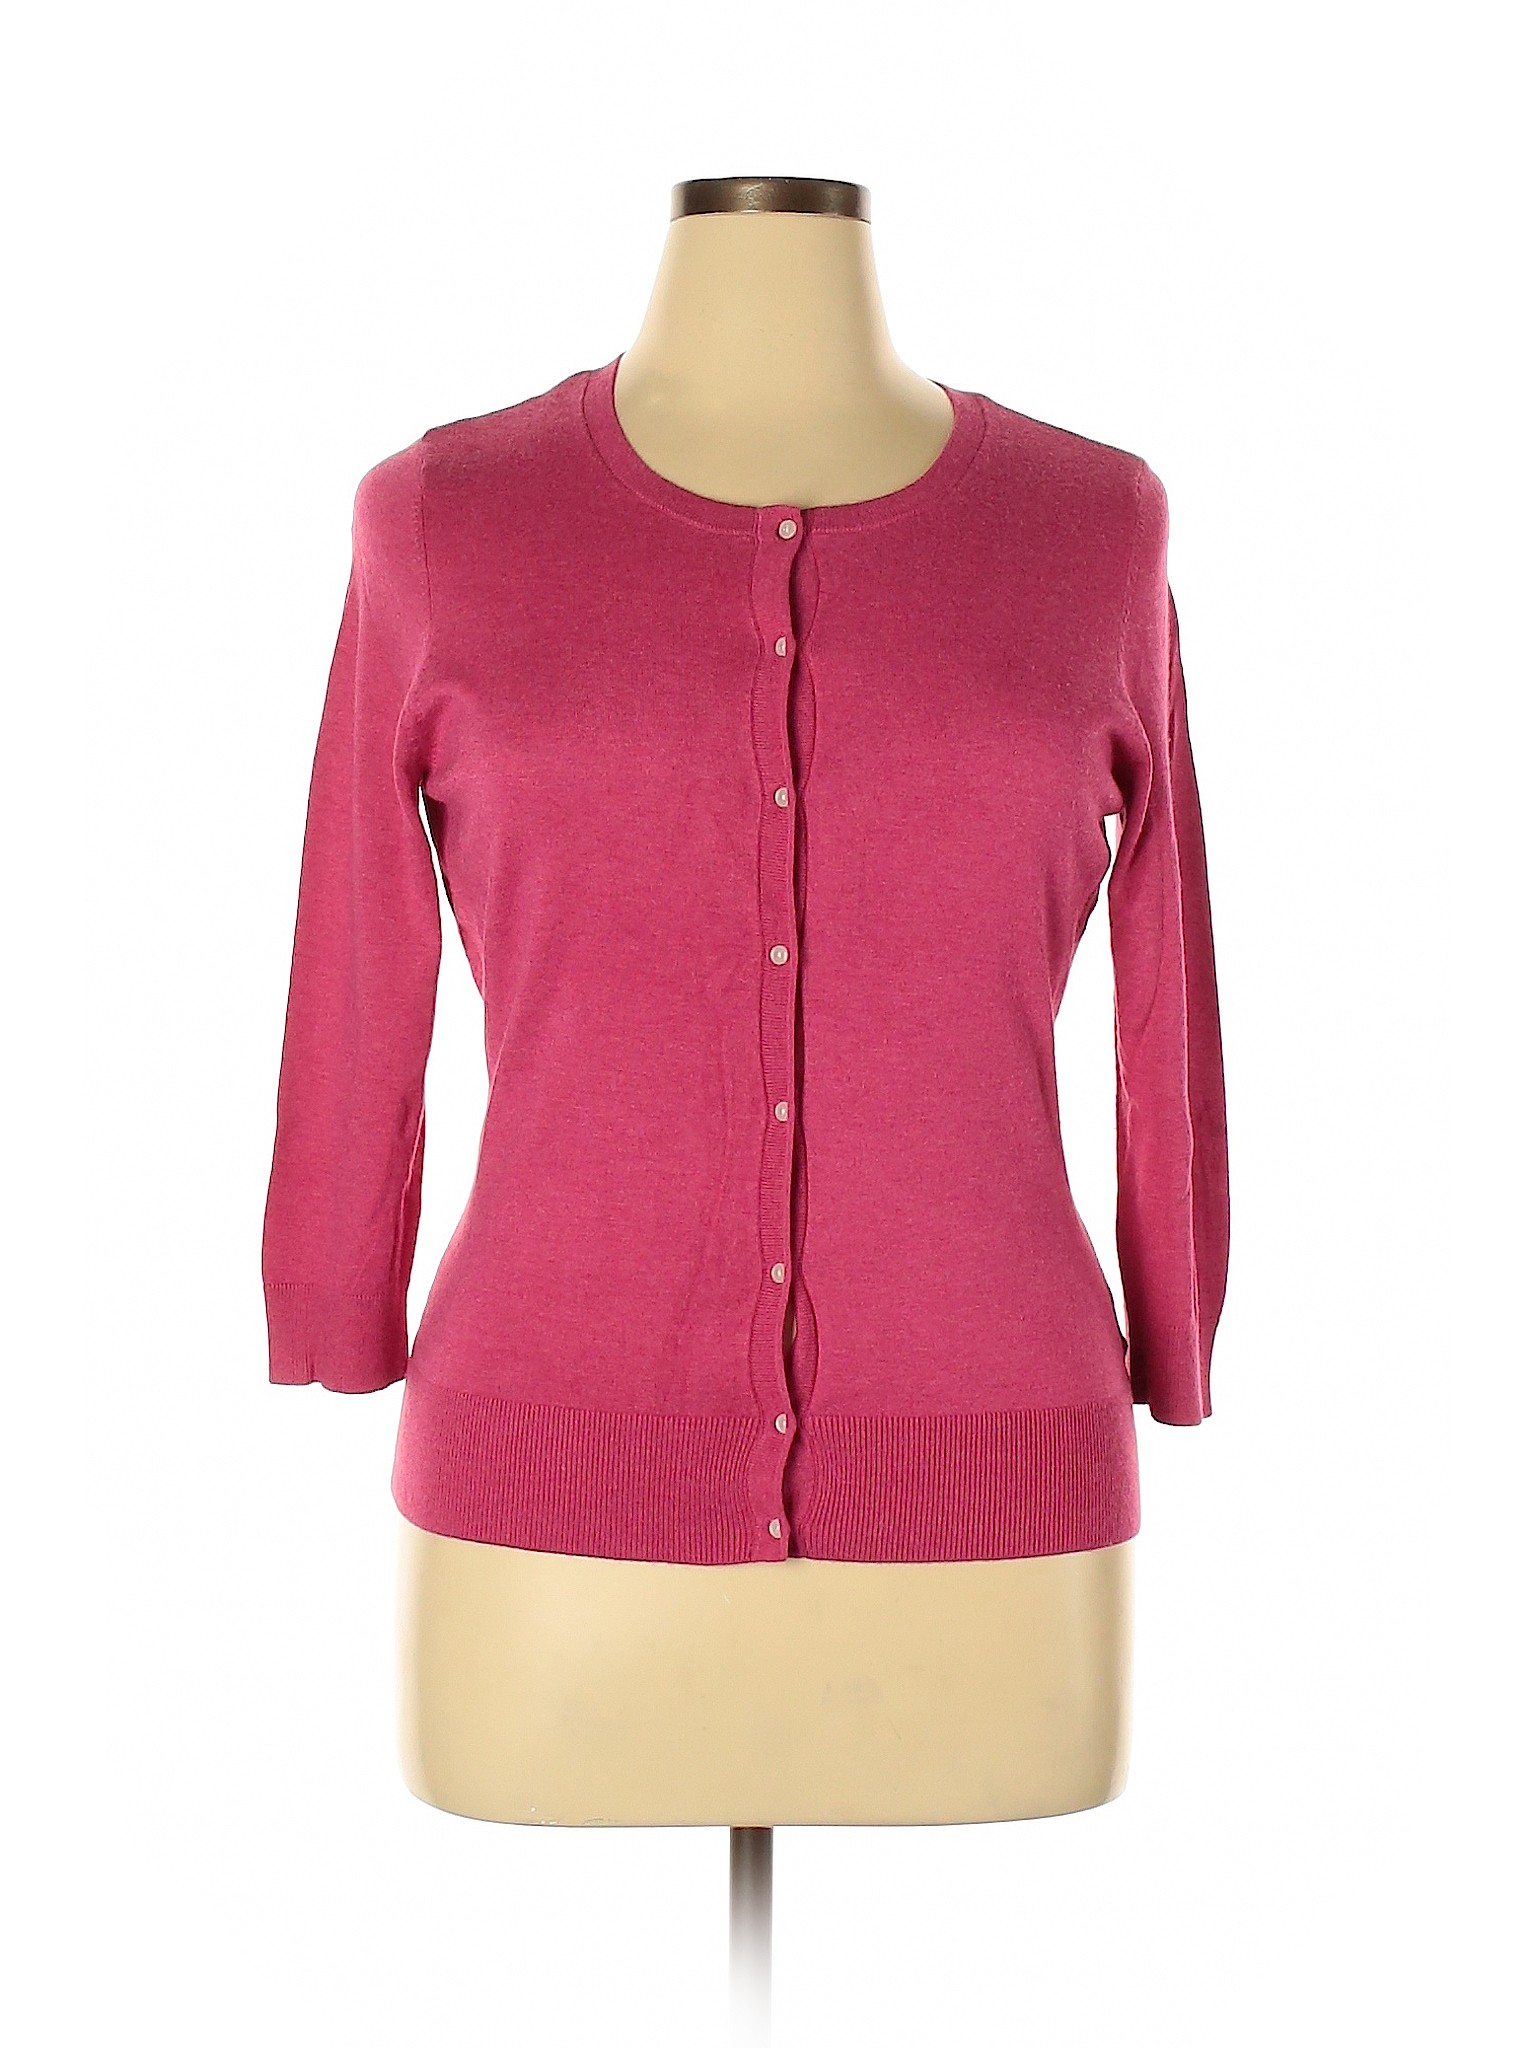 Halogen Women Pink Cardigan XL | eBay